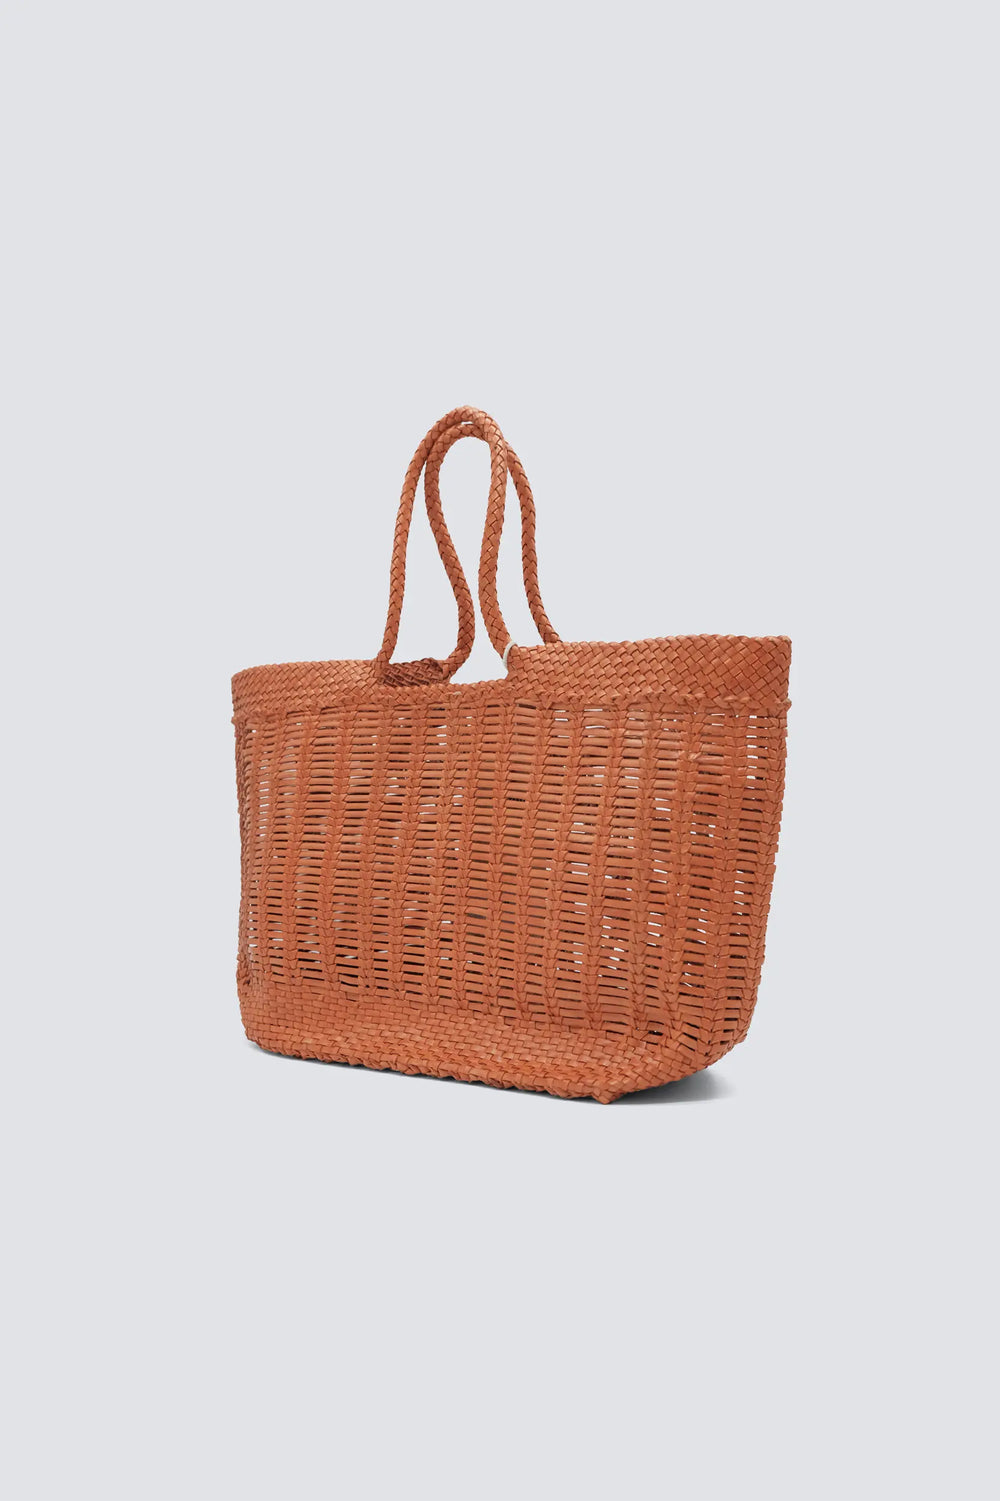 Dragon Diffusion - Woven Leather Bag Handmade - Window Basket Orange